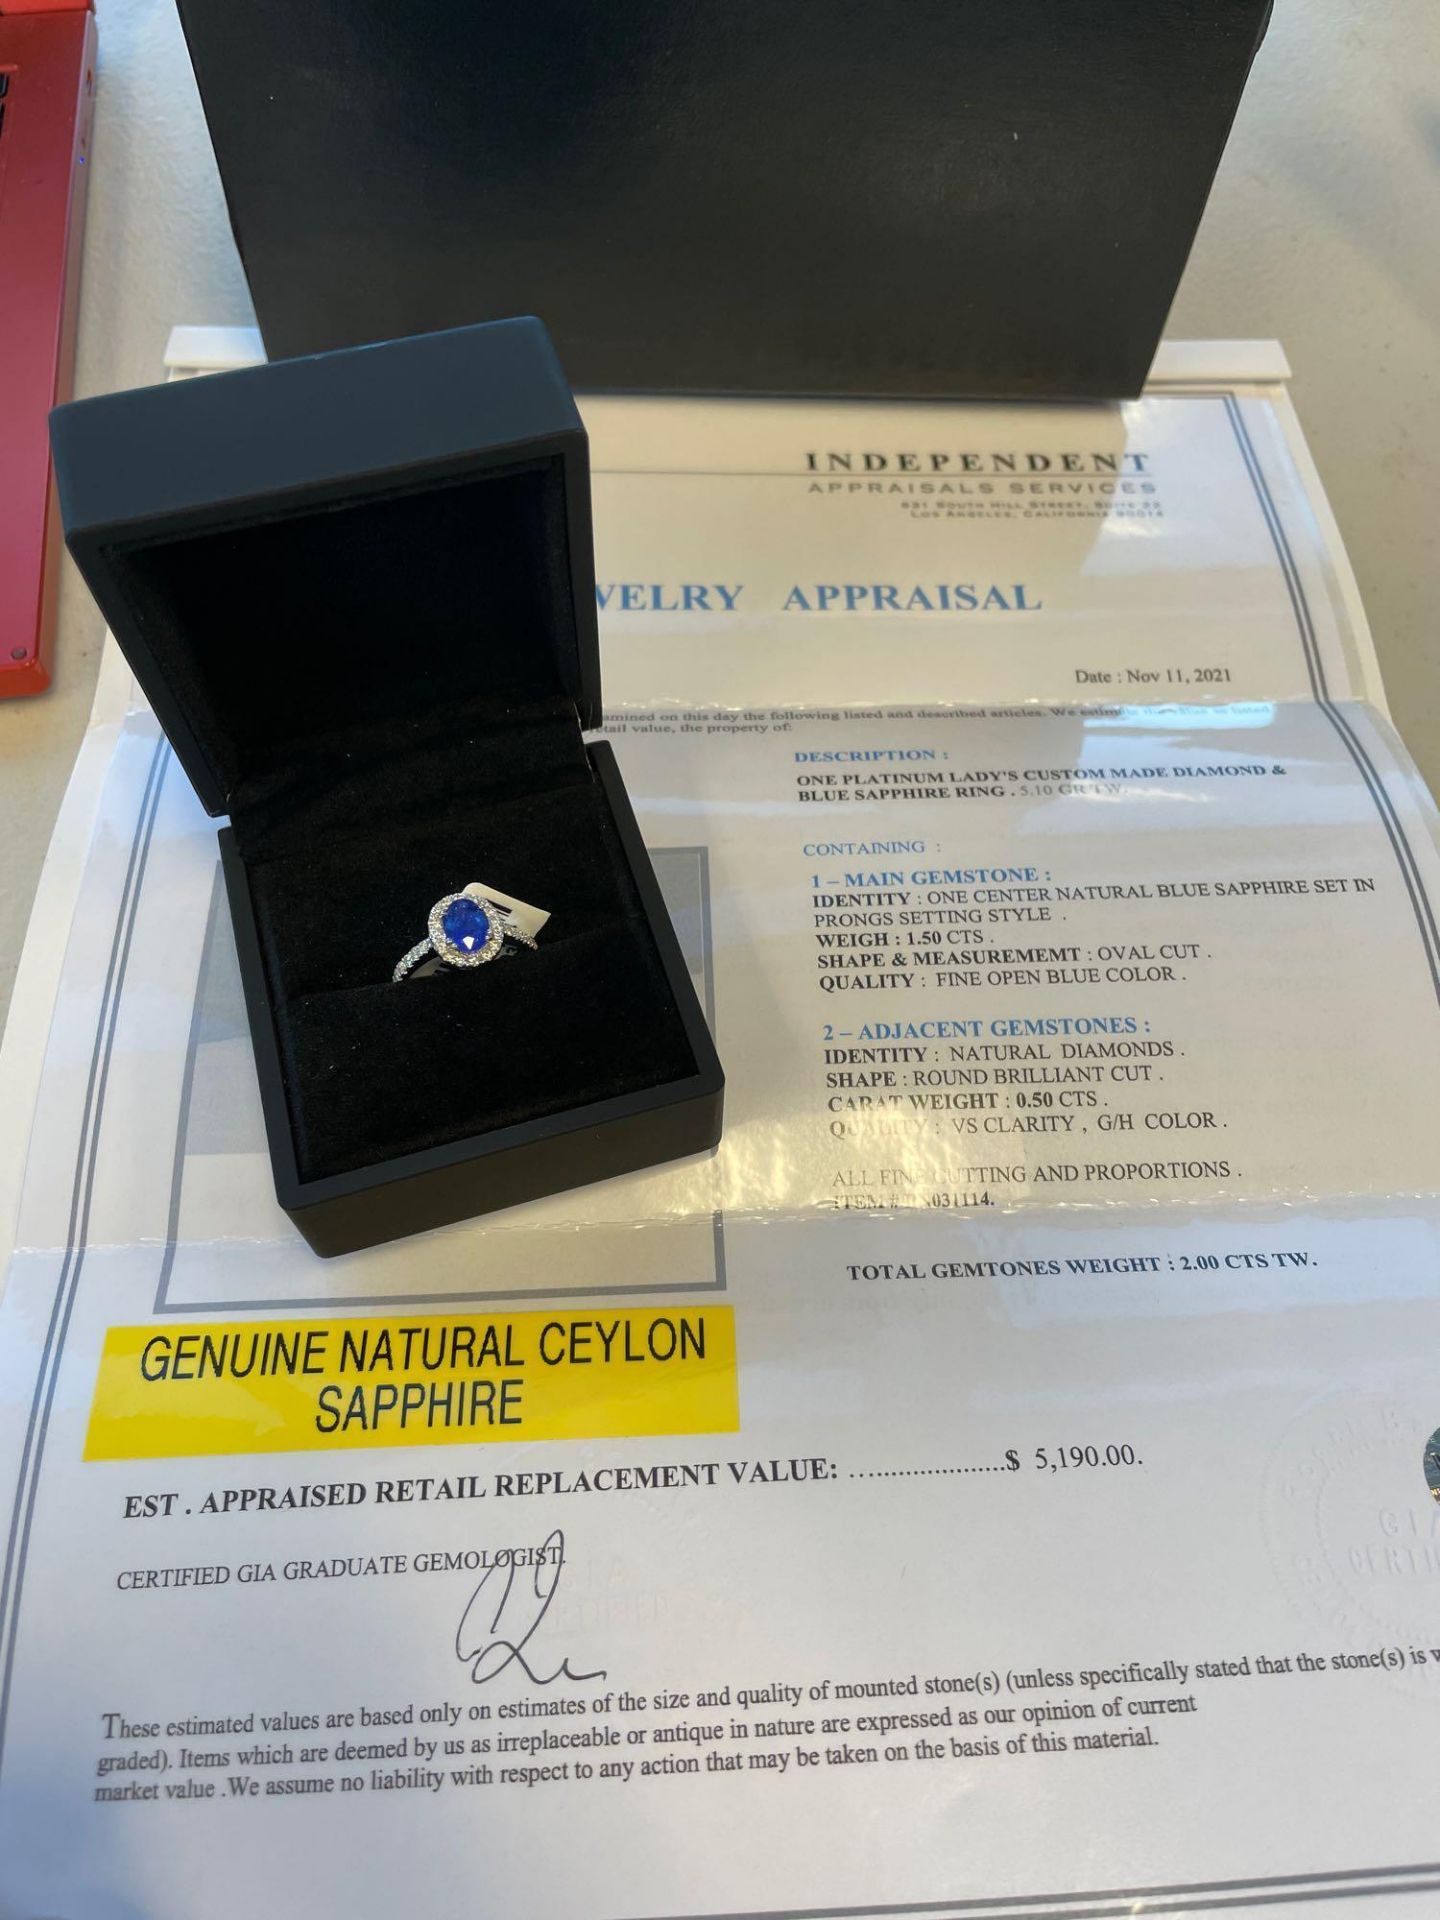 Platinum Lady's Custom Made Diamond & Blue Sapphire Ring 5.10 gr TW - Image 4 of 6